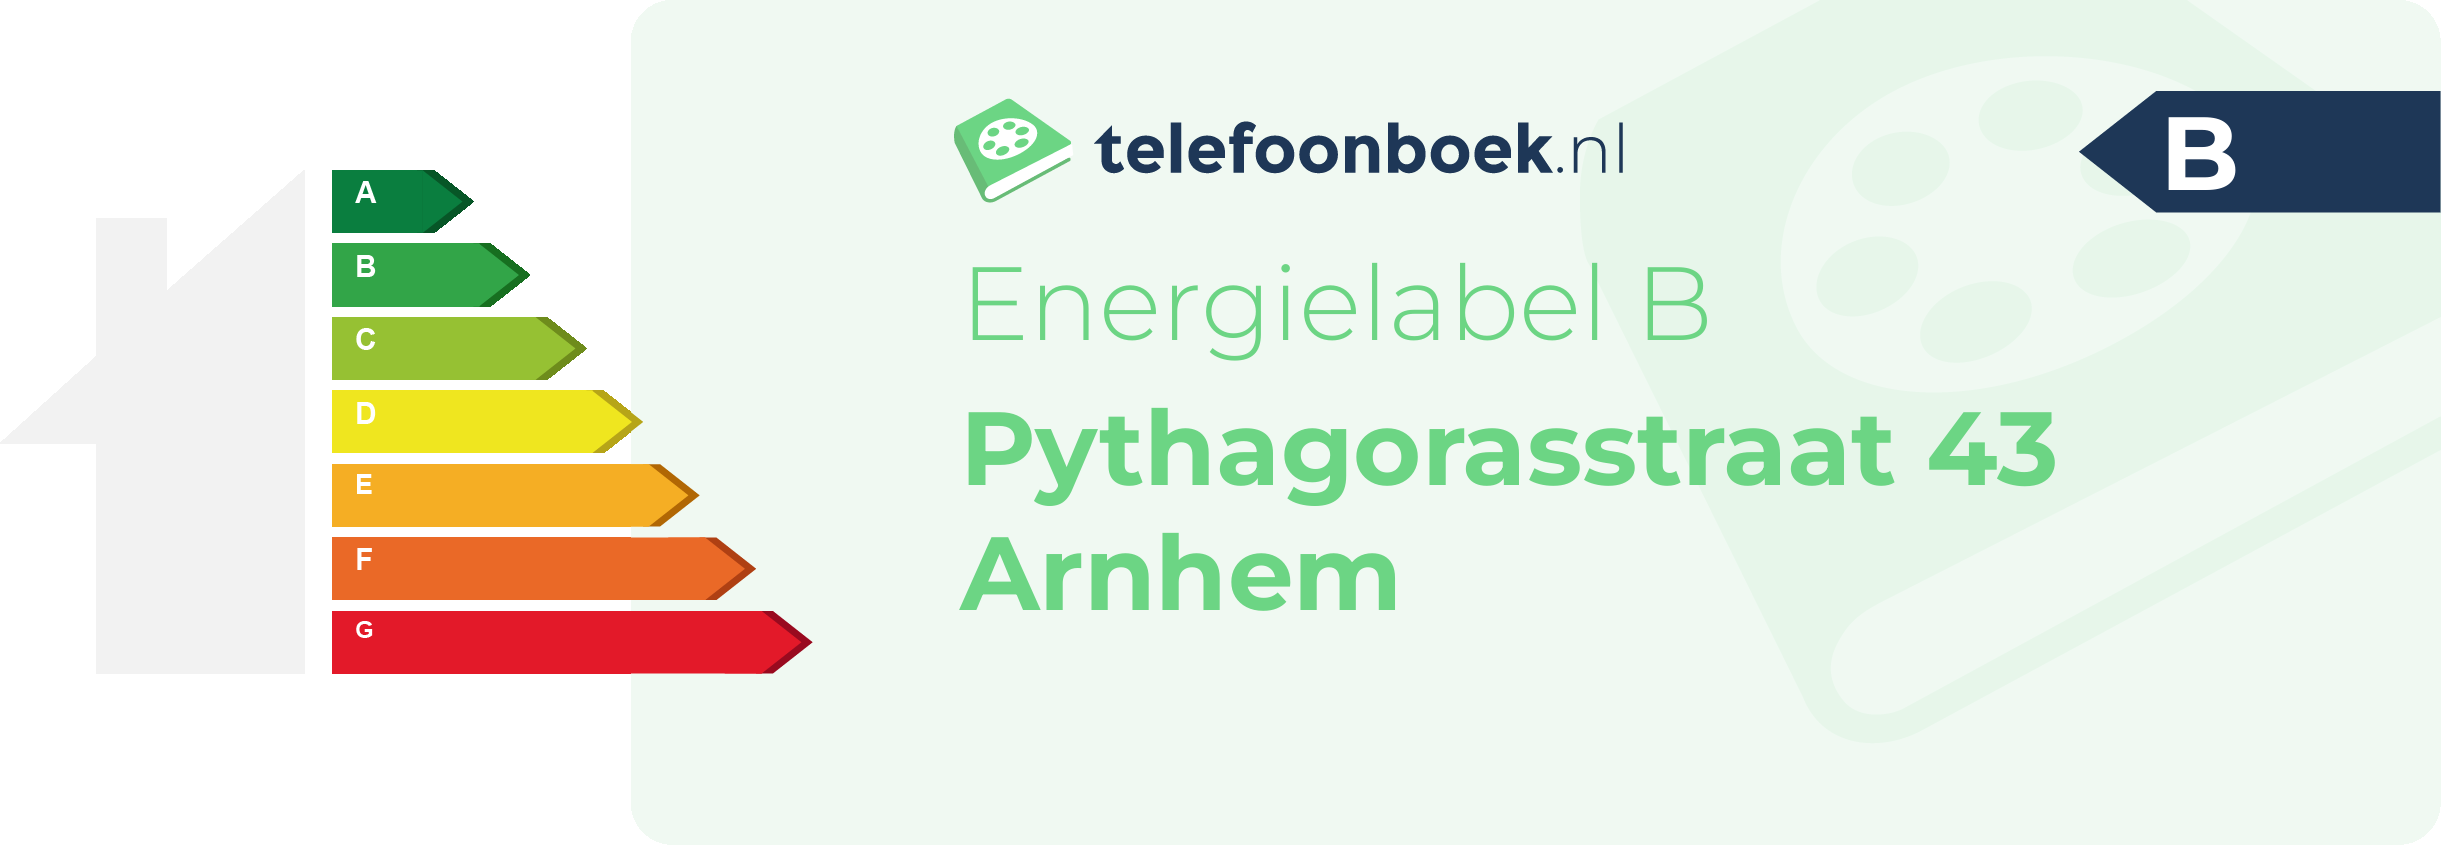 Energielabel Pythagorasstraat 43 Arnhem